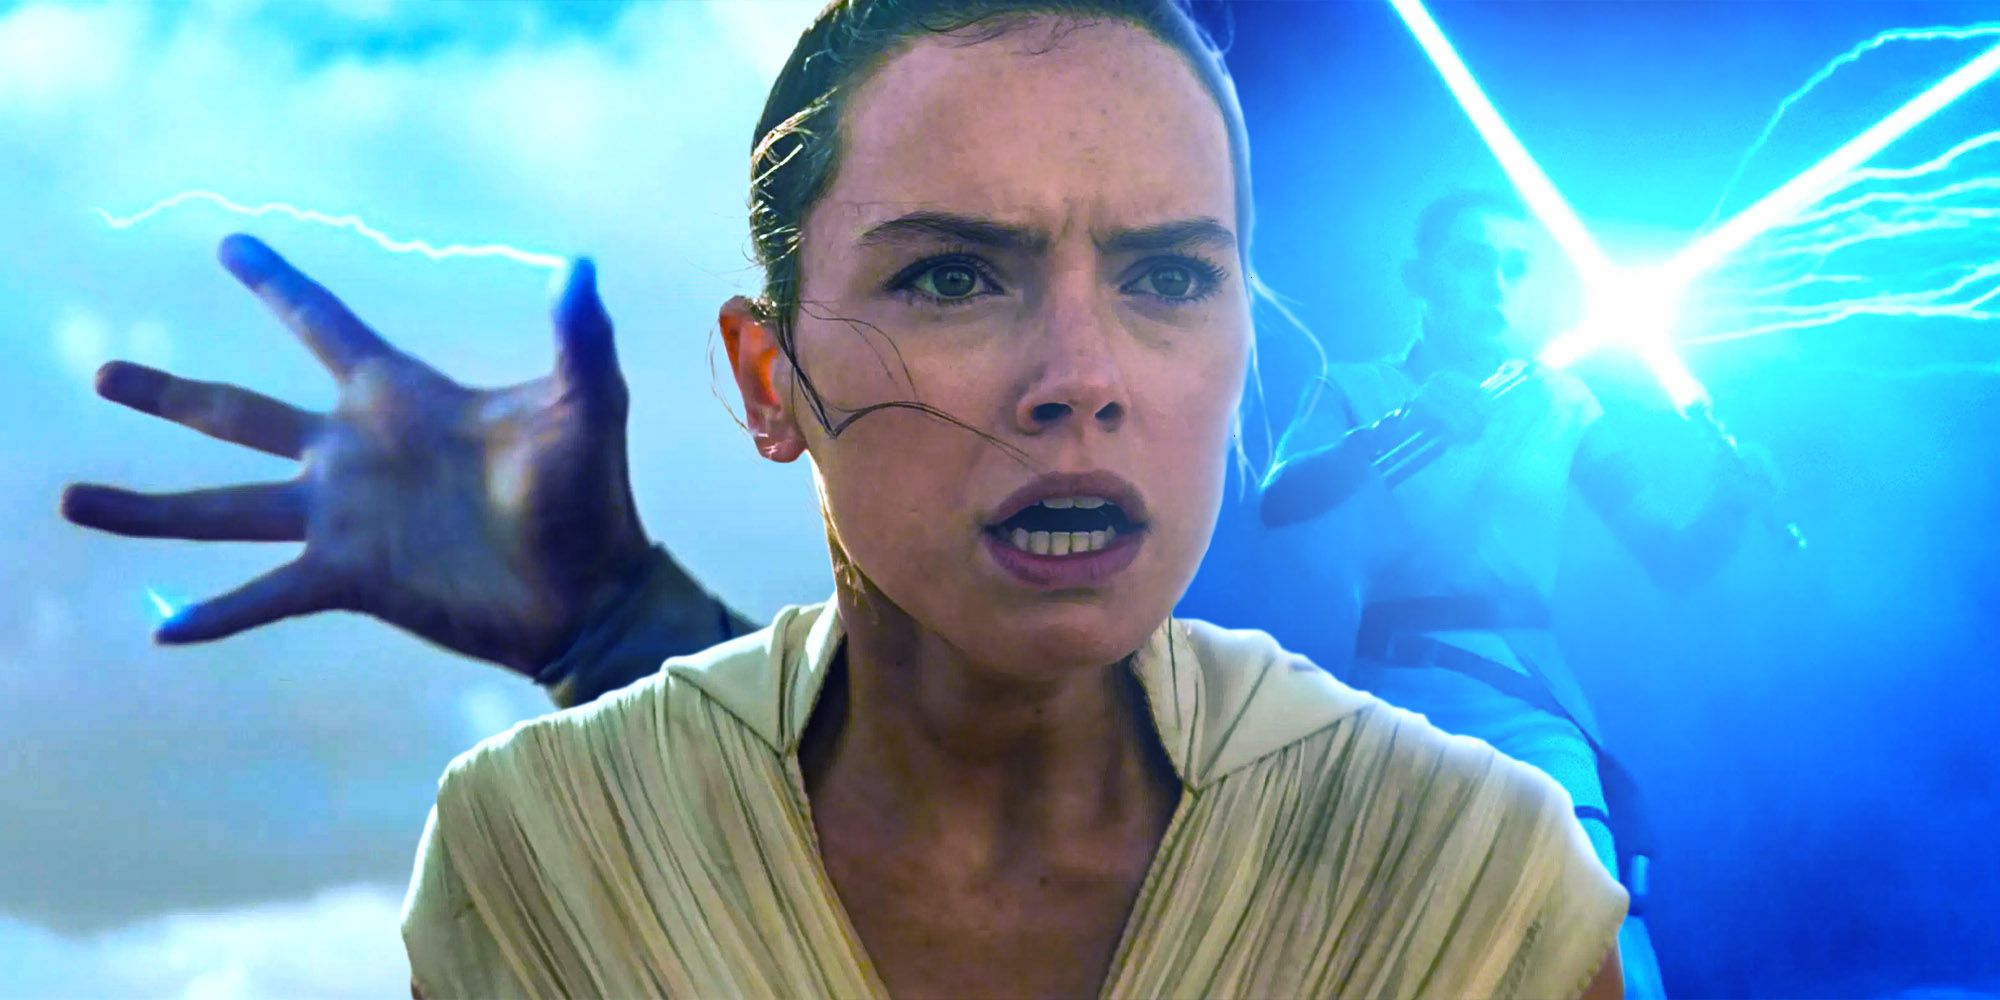 Rey Star wars the rise of skywalker force lightning powers final battle